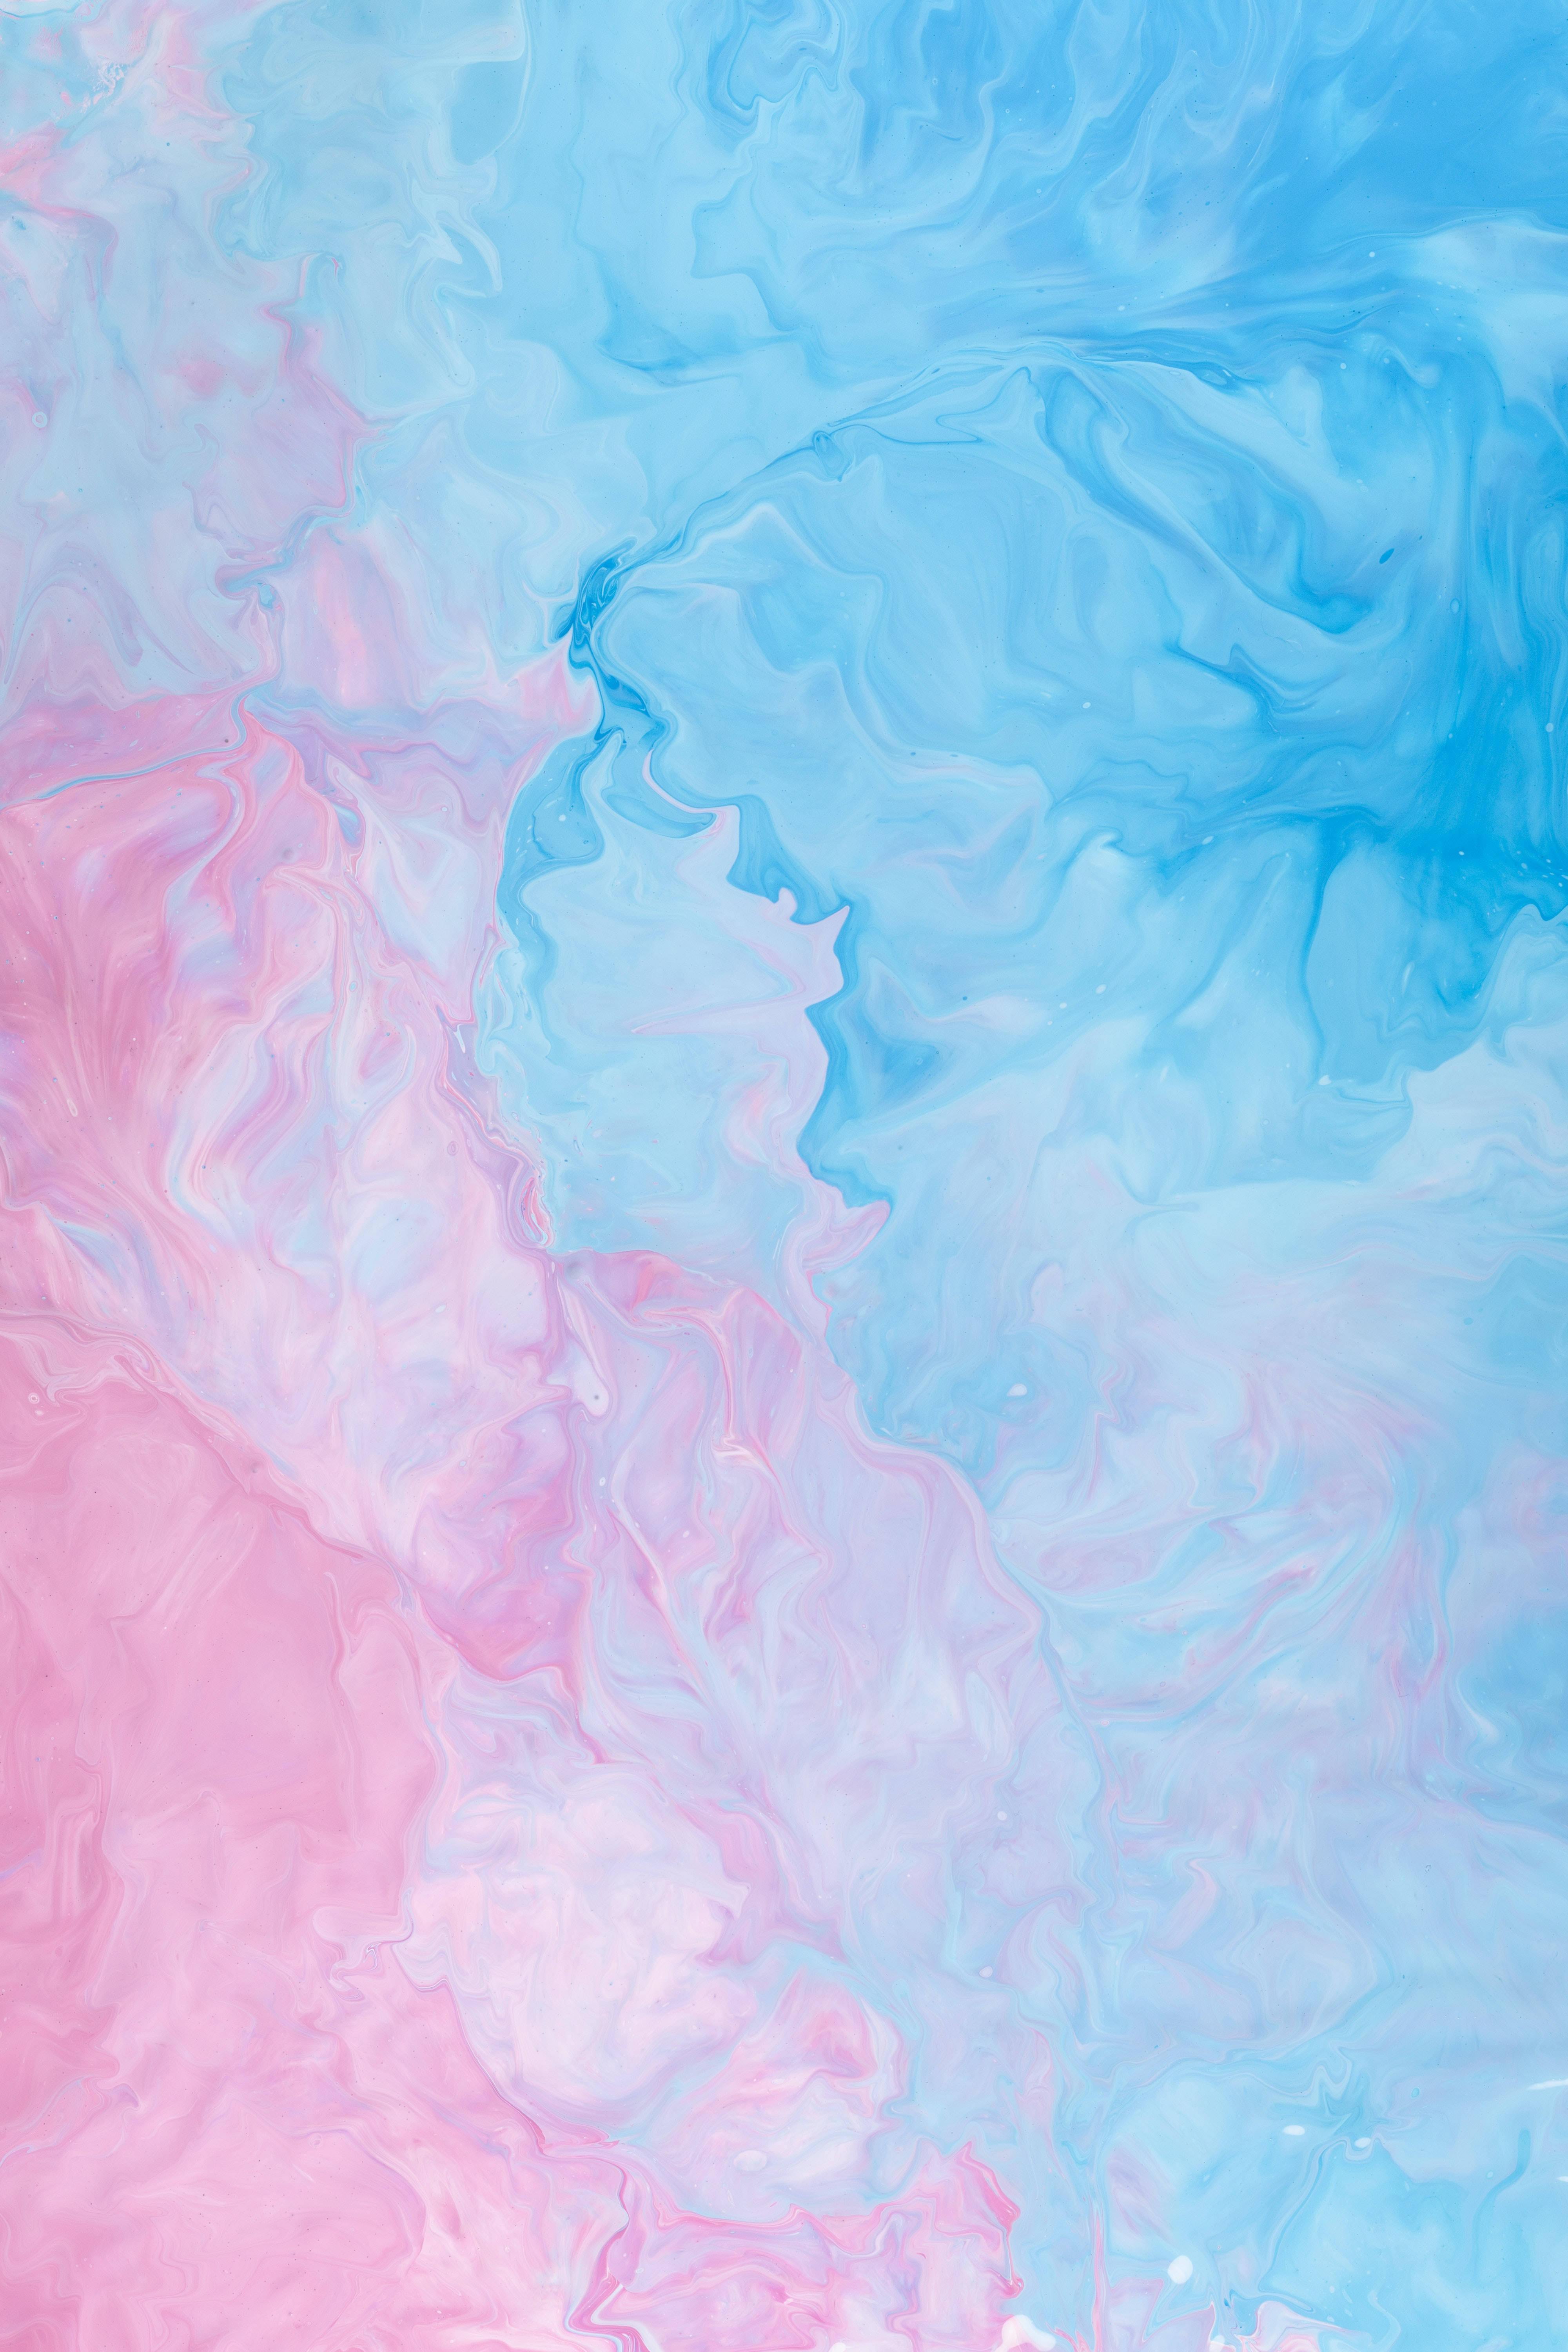 Mergeregioneceleste Di Una Texture Di Marmo Rosa E Blu In 4k. Sfondo